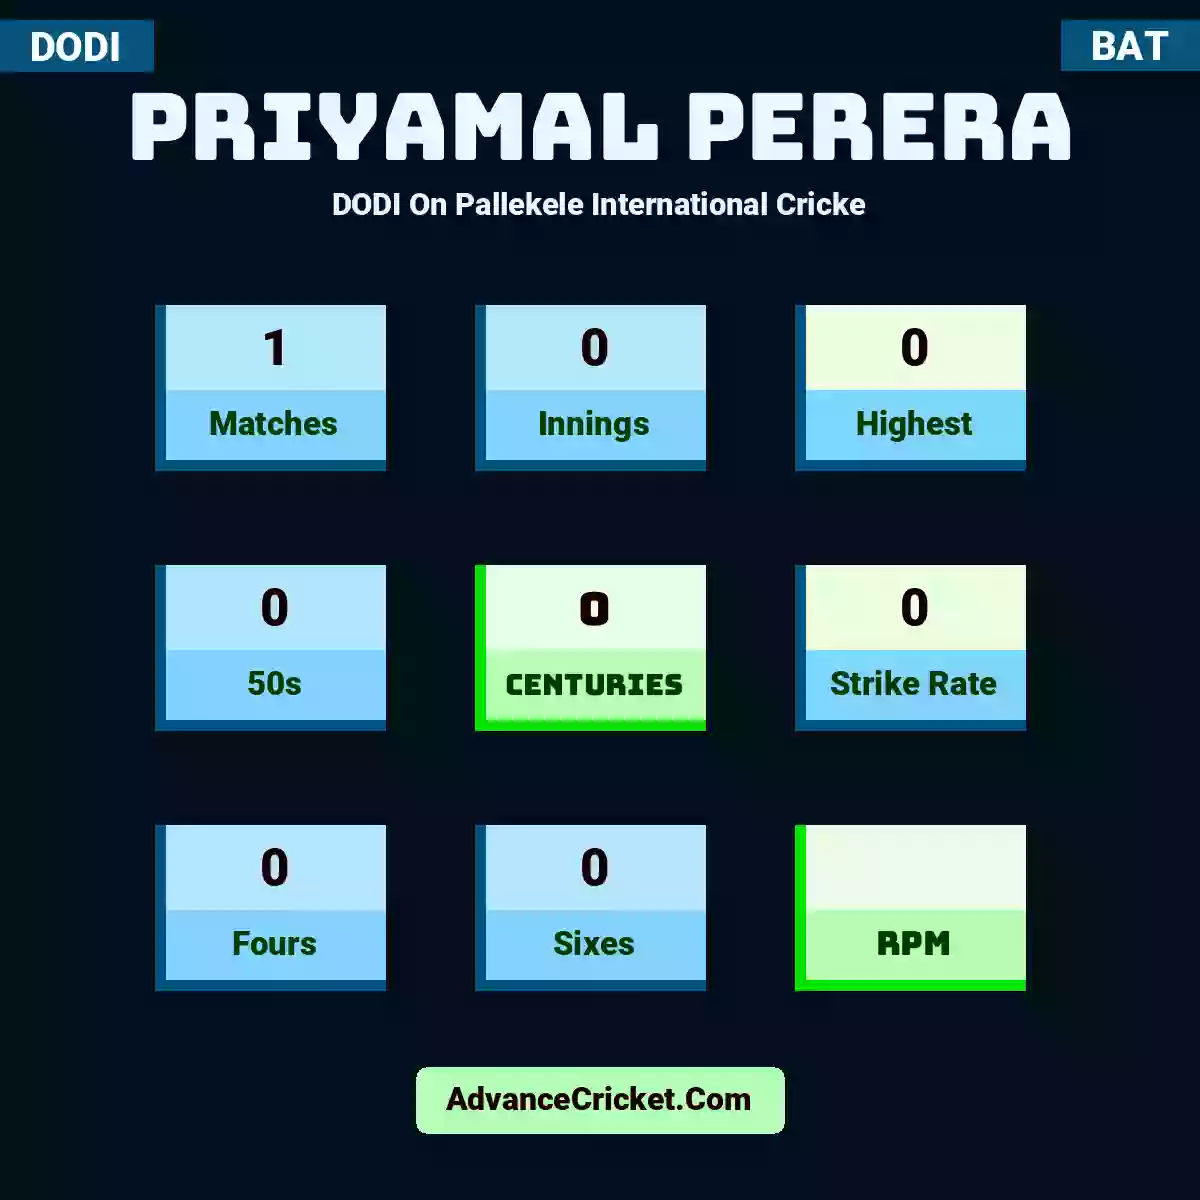 Priyamal Perera DODI  On Pallekele International Cricke, Priyamal Perera played 1 matches, scored 0 runs as highest, 0 half-centuries, and 0 centuries, with a strike rate of 0. P.Perera hit 0 fours and 0 sixes.